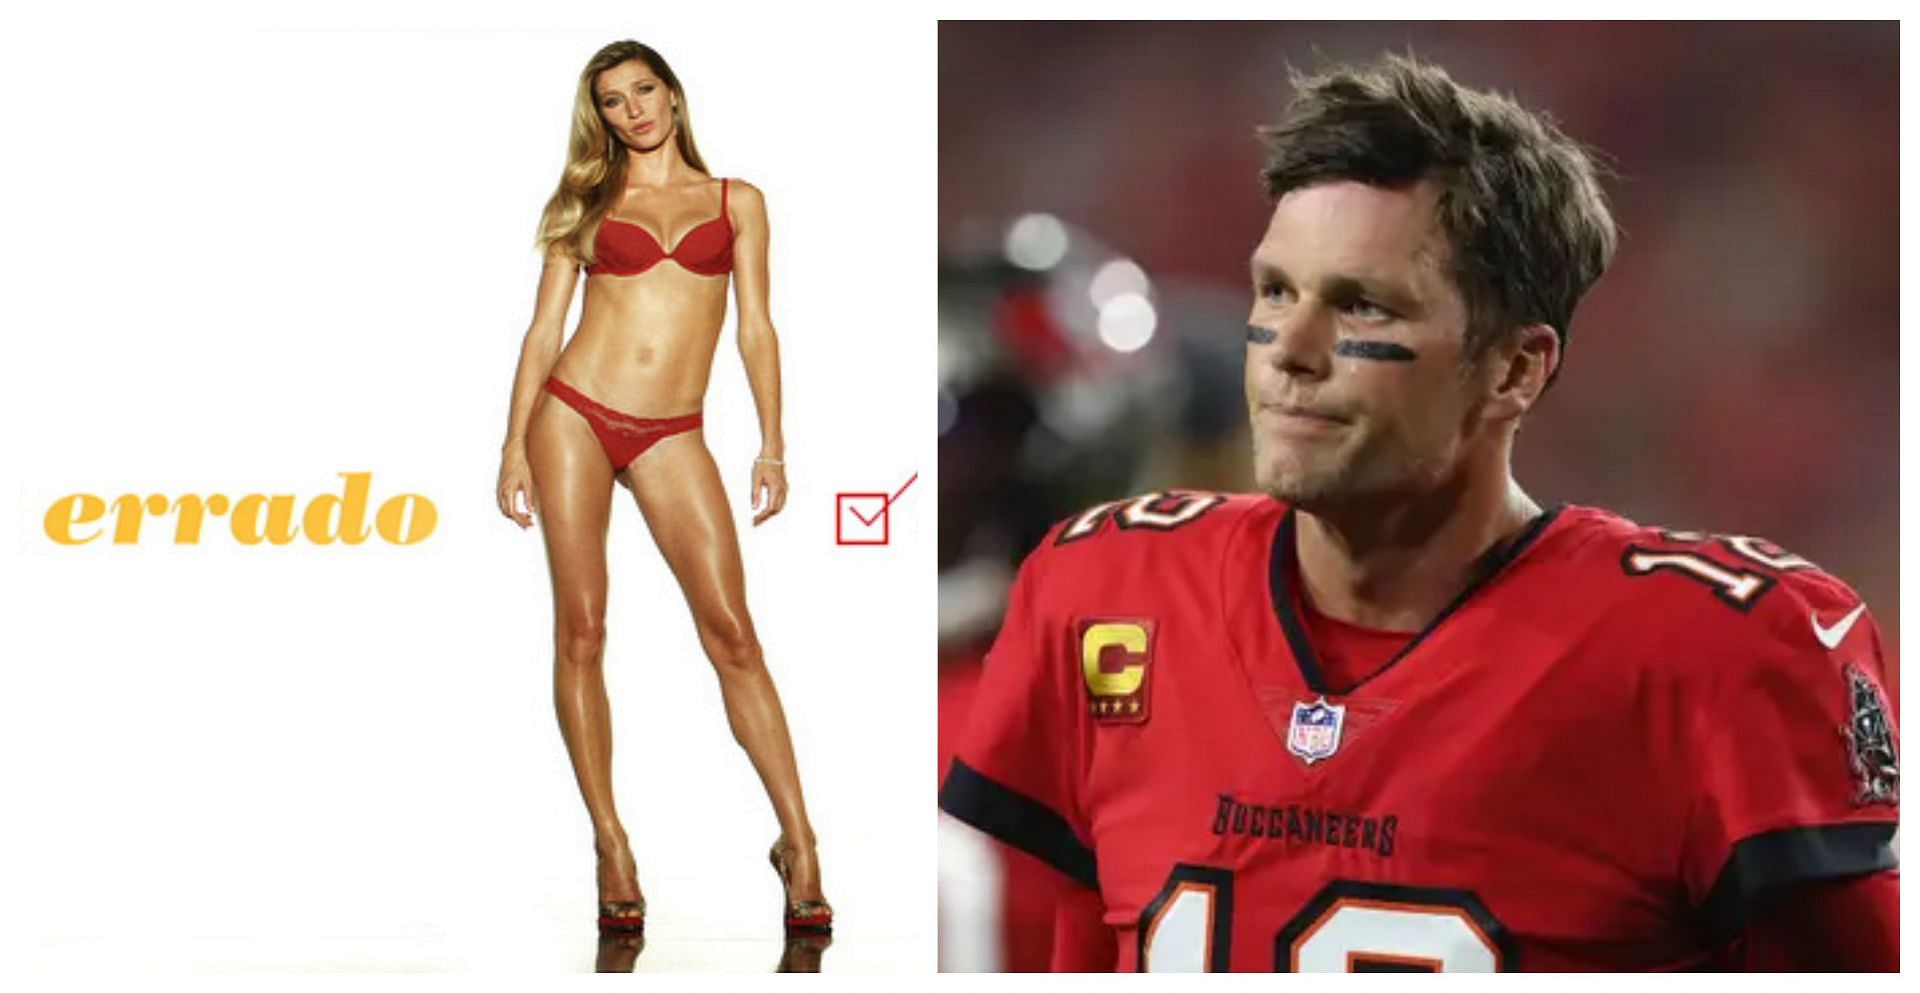 Tampa Bay Buccaneers quarterback Tom Brady and Giselle Bundchen 